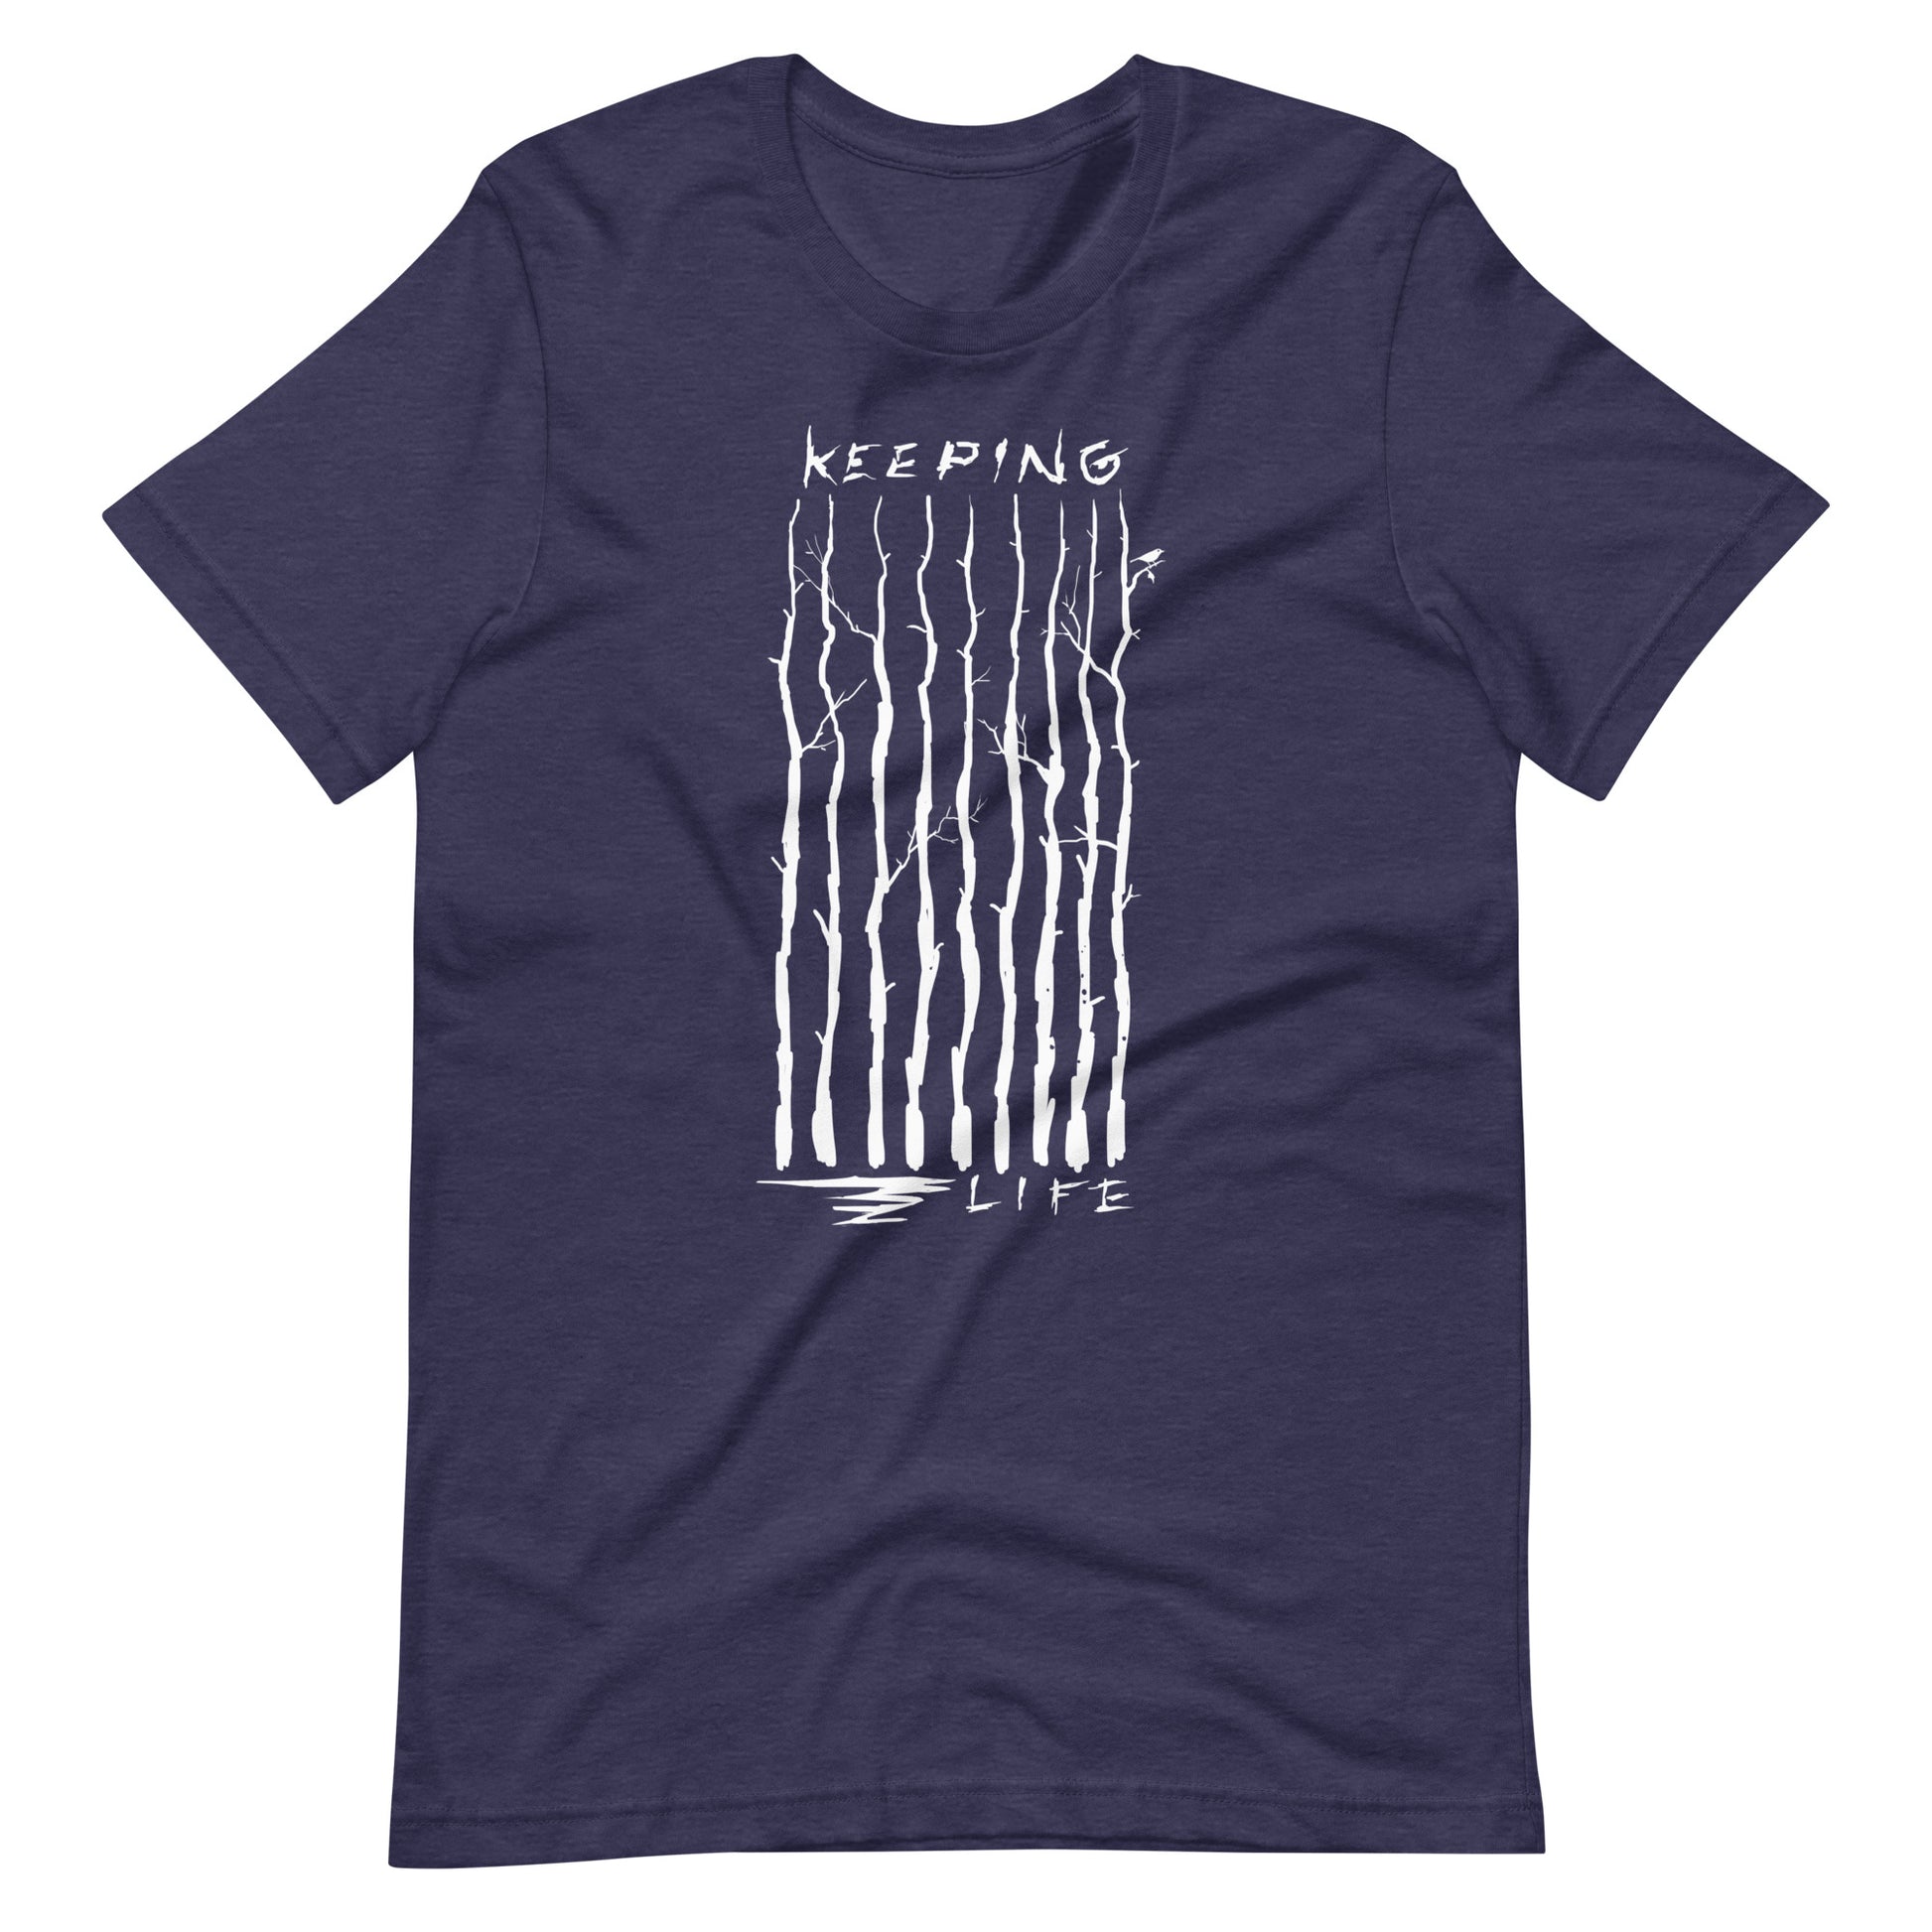 Keeping Lift - Men's t-shirt - Heather Midnight Navy Front